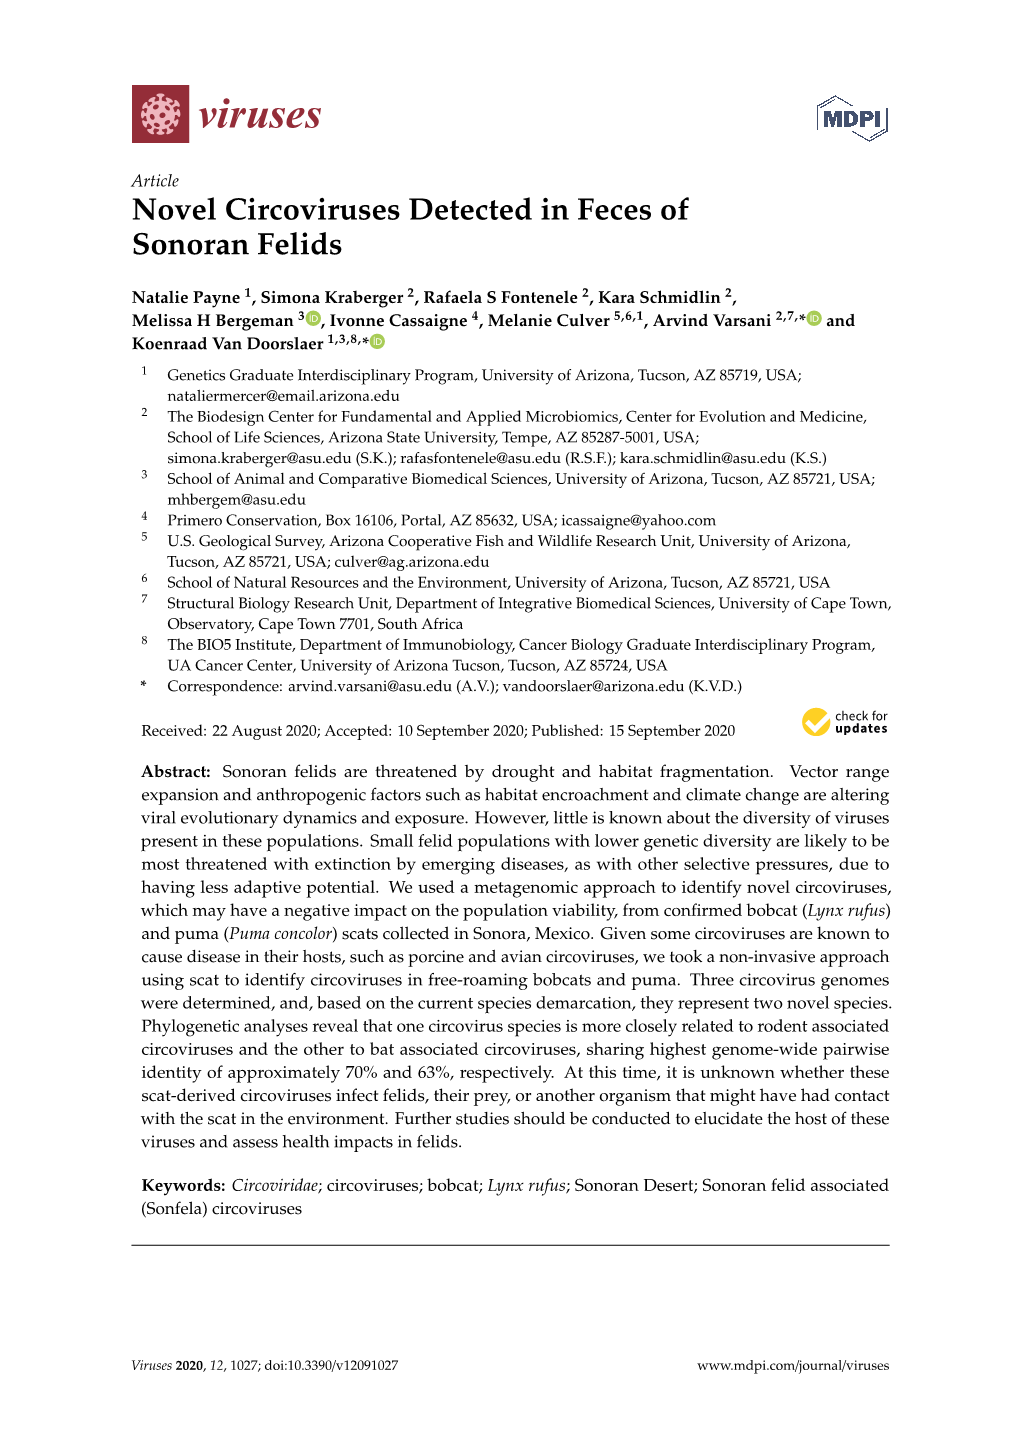 Novel Circoviruses Detected in Feces of Sonoran Felids